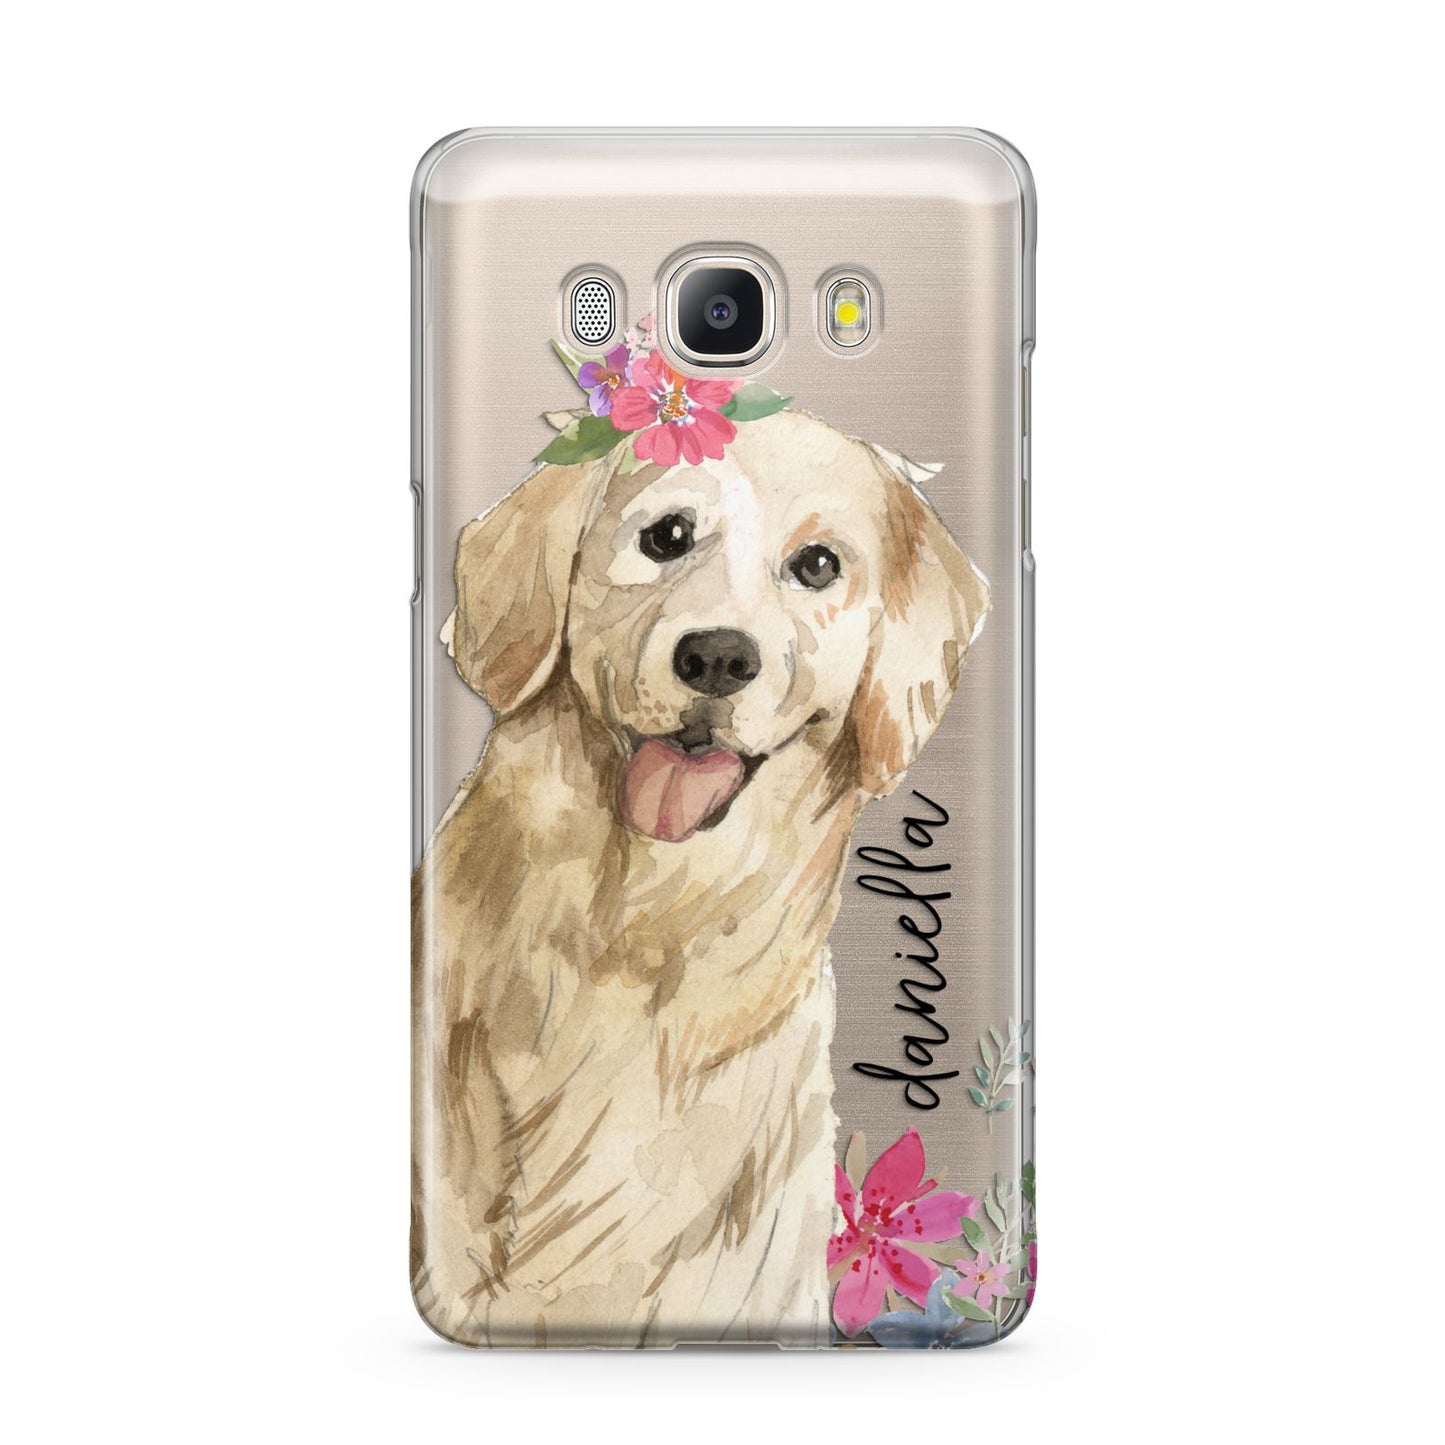 Personalised Golden Retriever Dog Samsung Galaxy J5 2016 Case